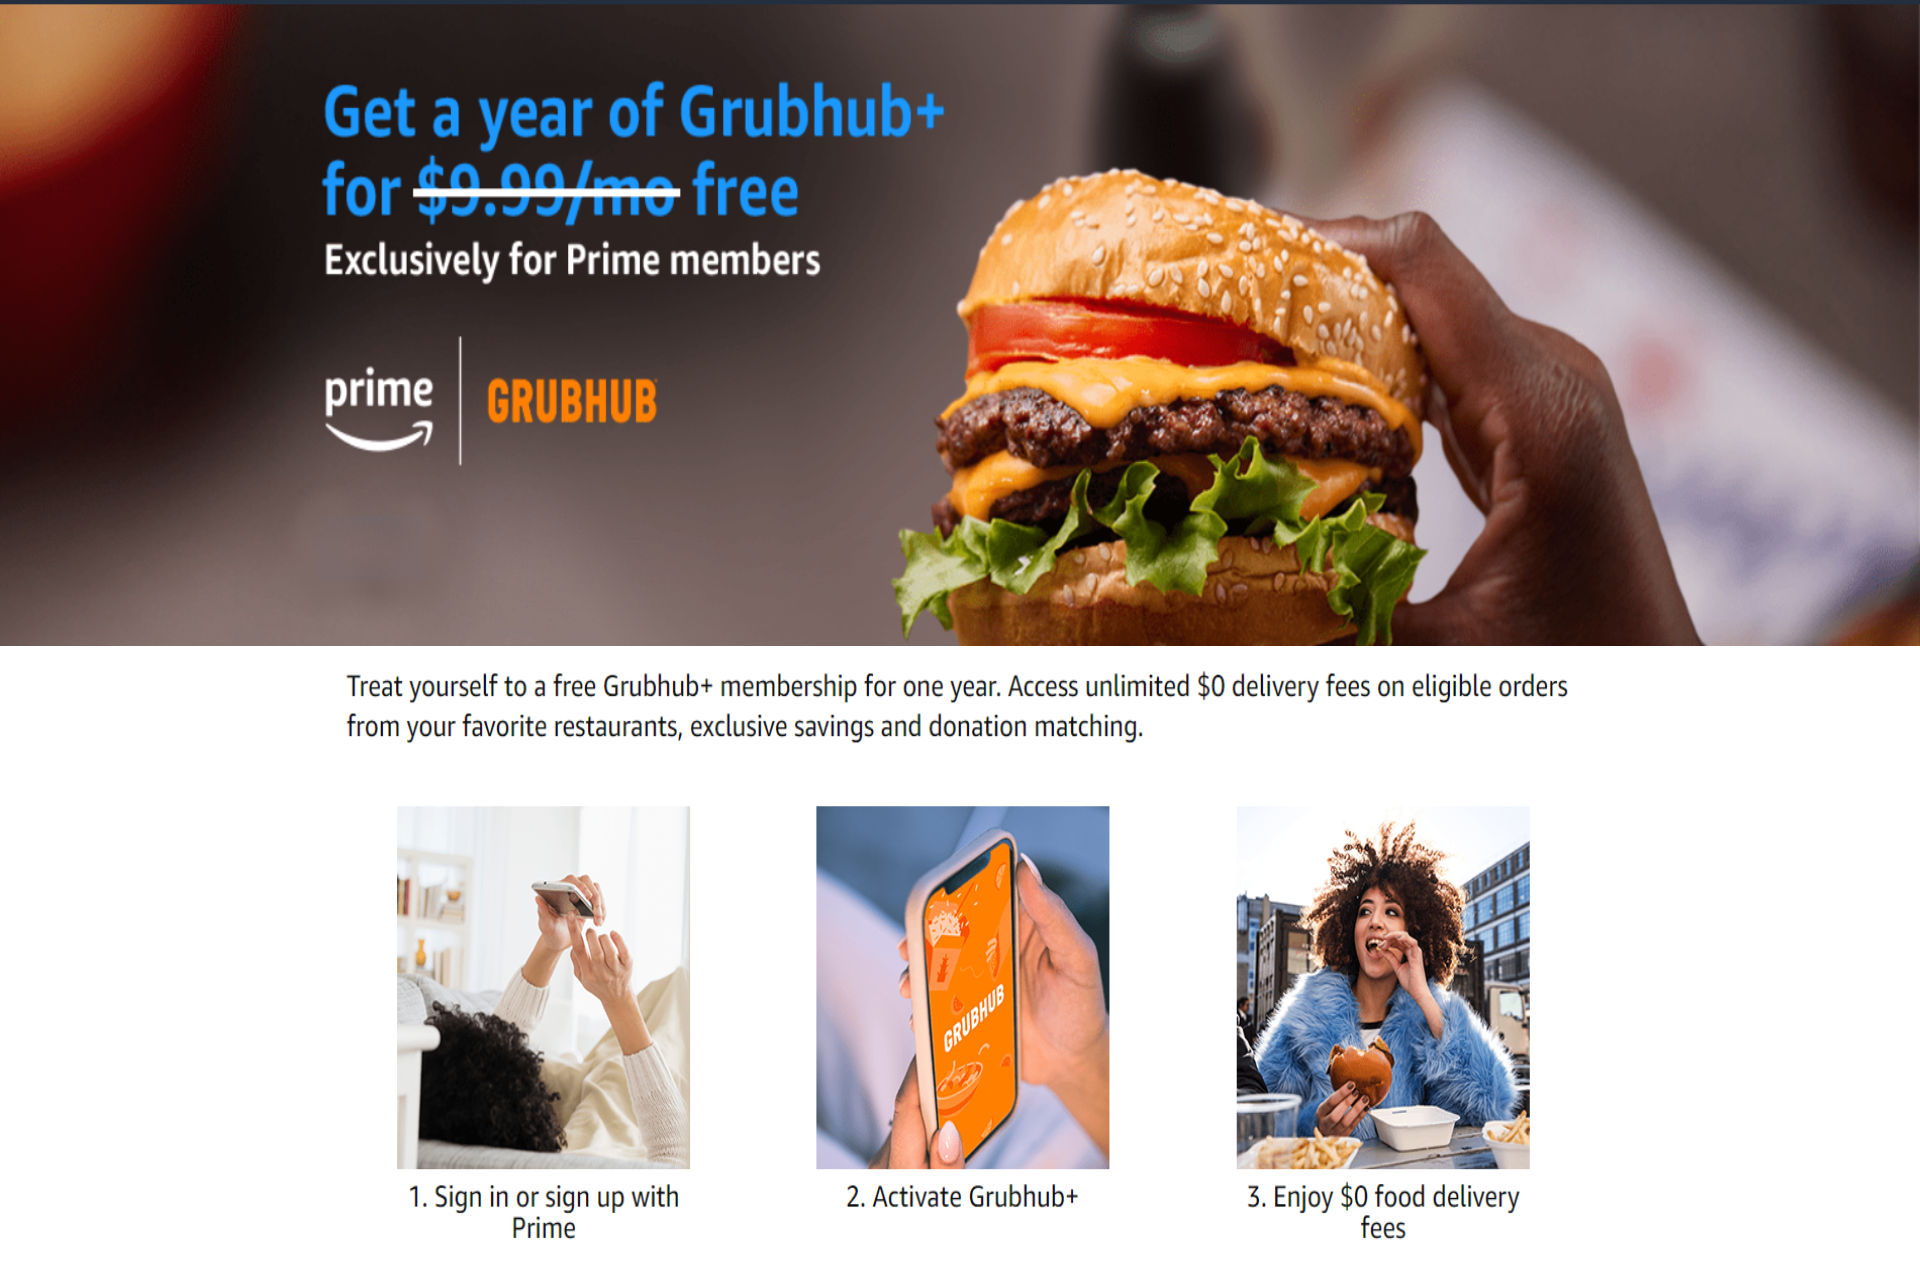 Amazon offering free year of grubhub+